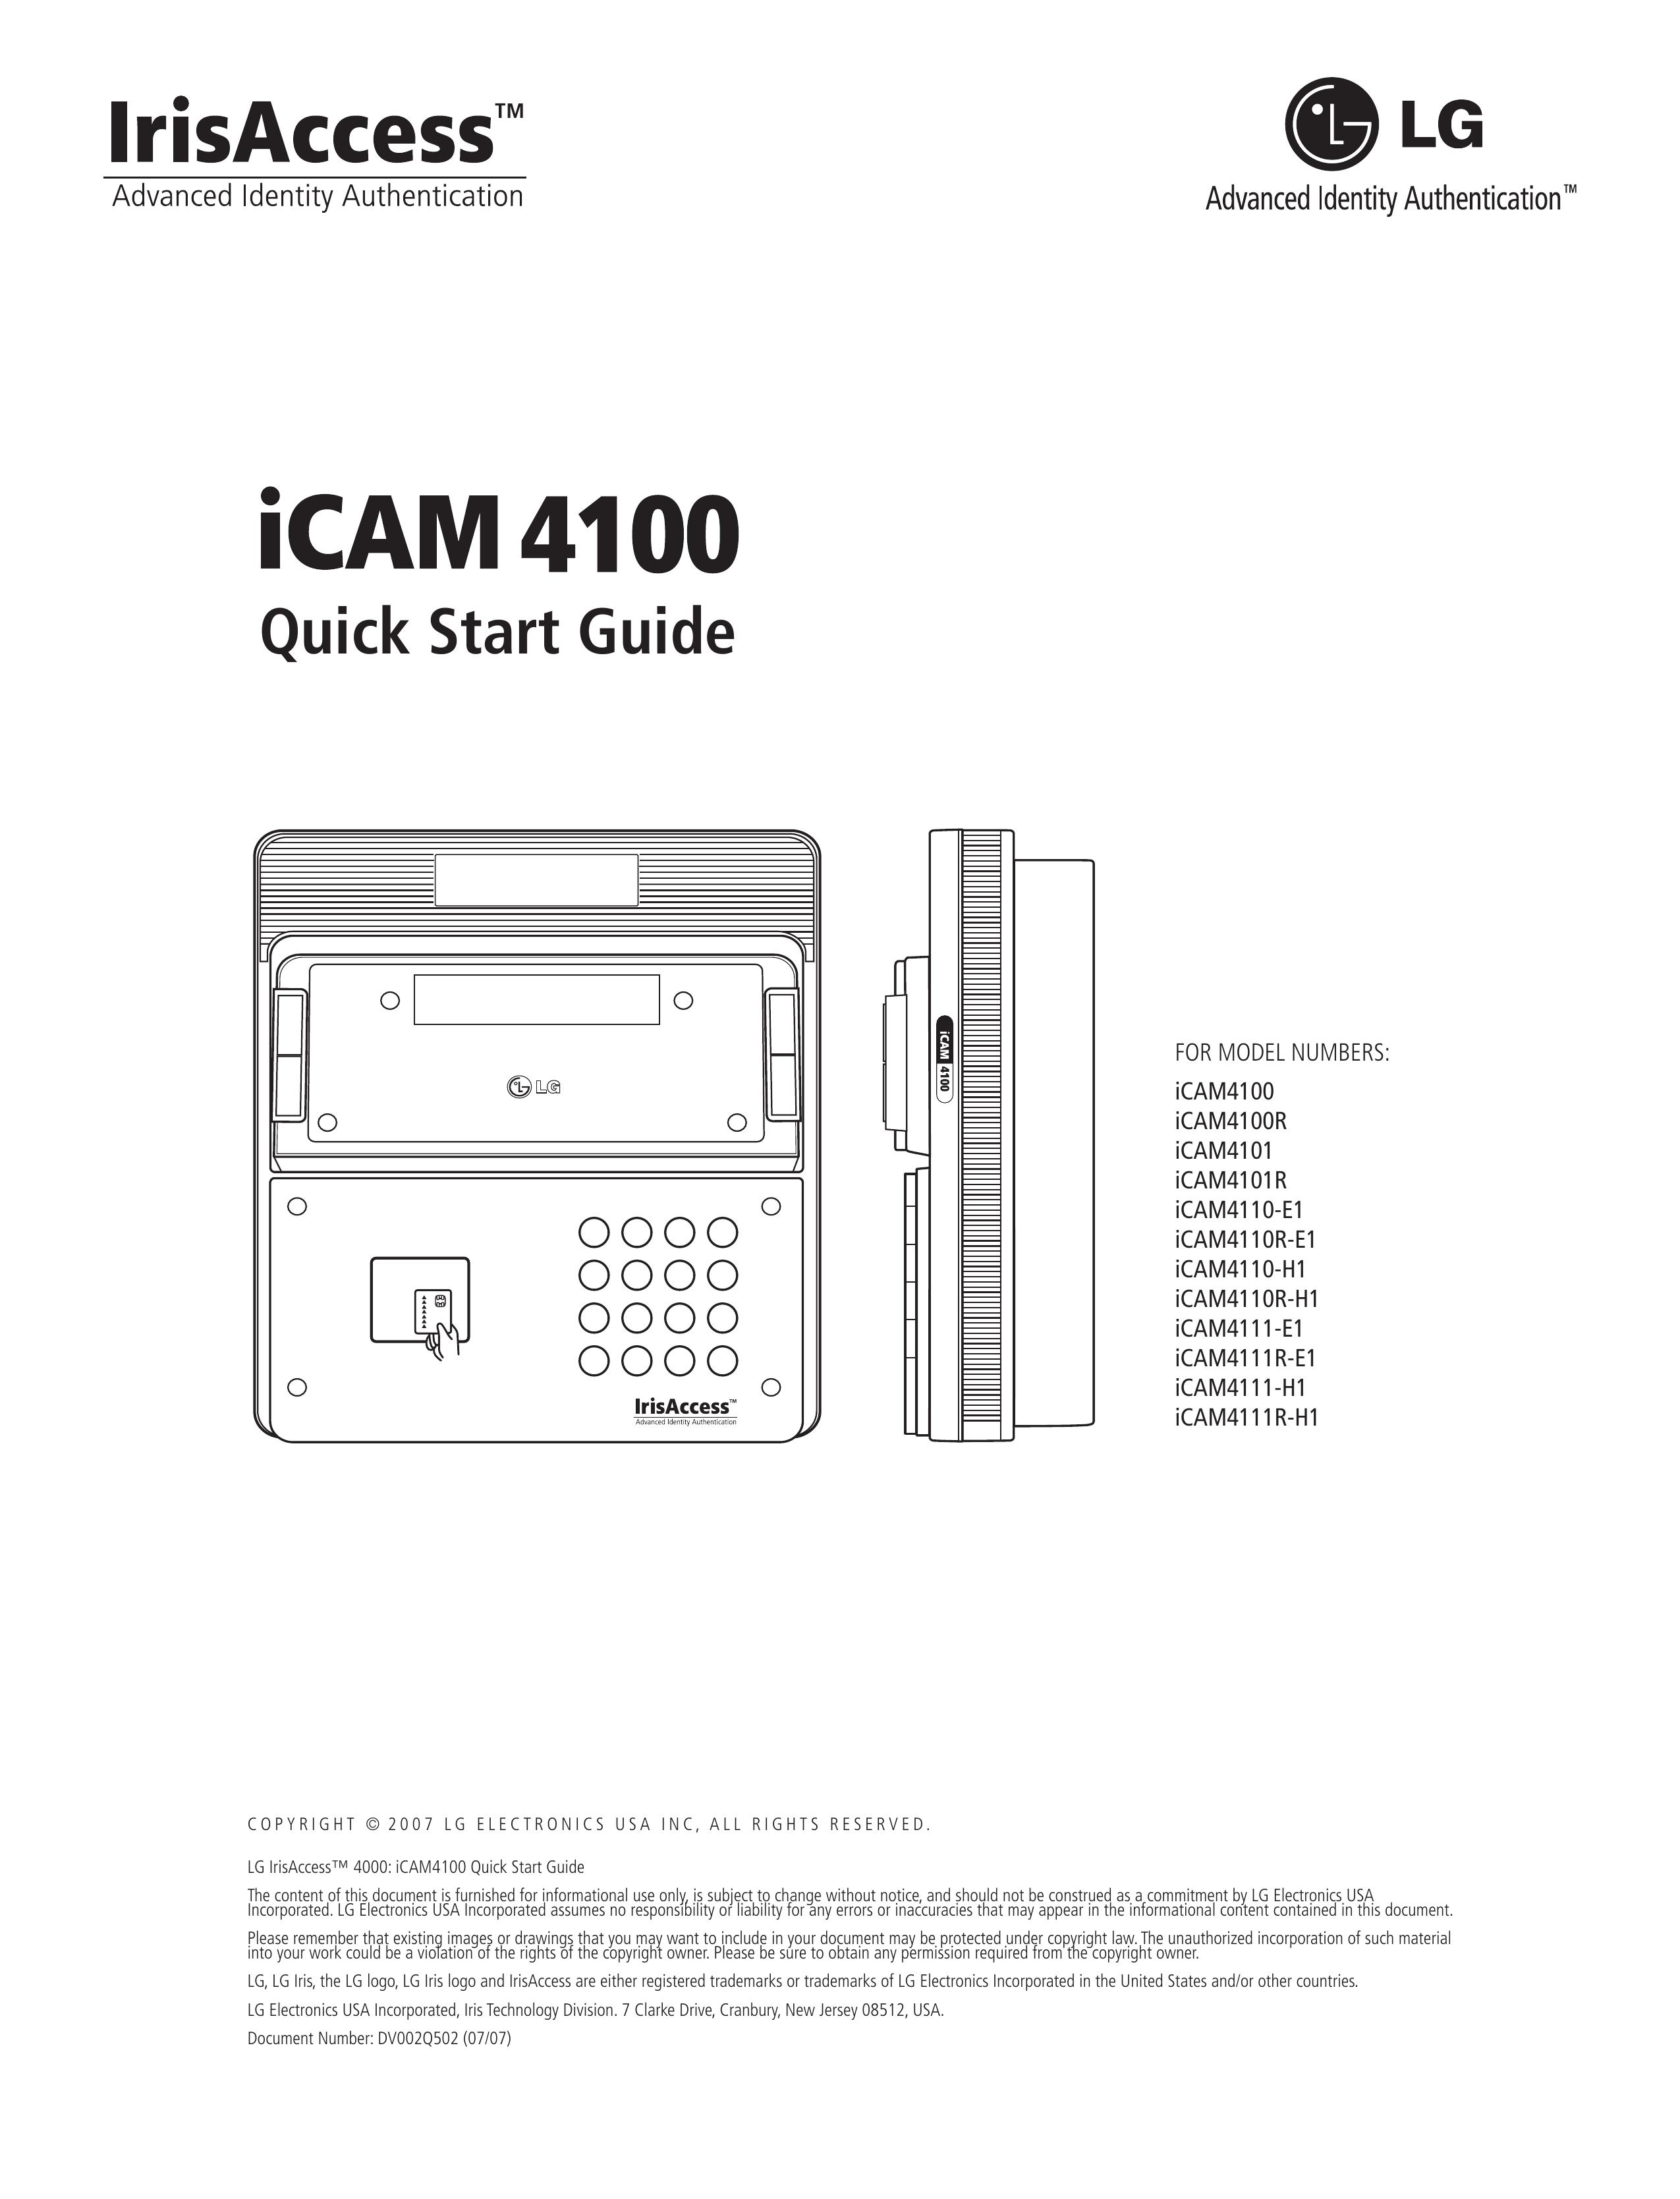 LG Electronics iCAM4110-H1 Digital Camera User Manual